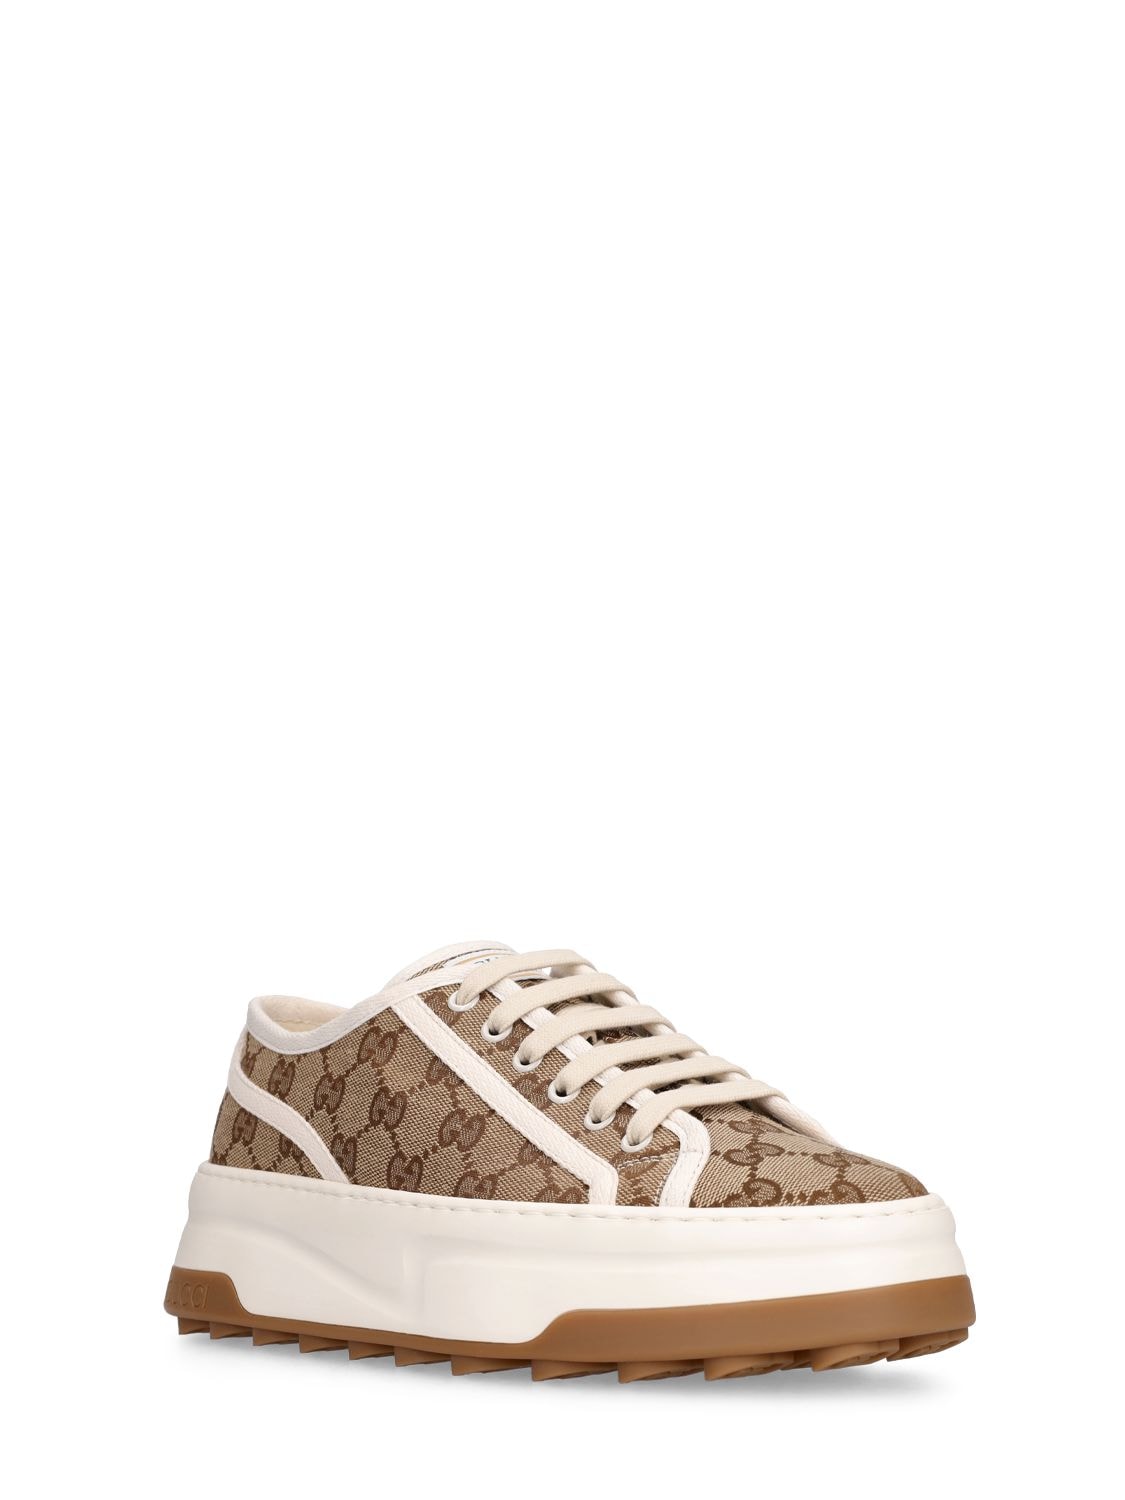 Shop Gucci 50mm Tennis Treck Sneakers In Ebony,white